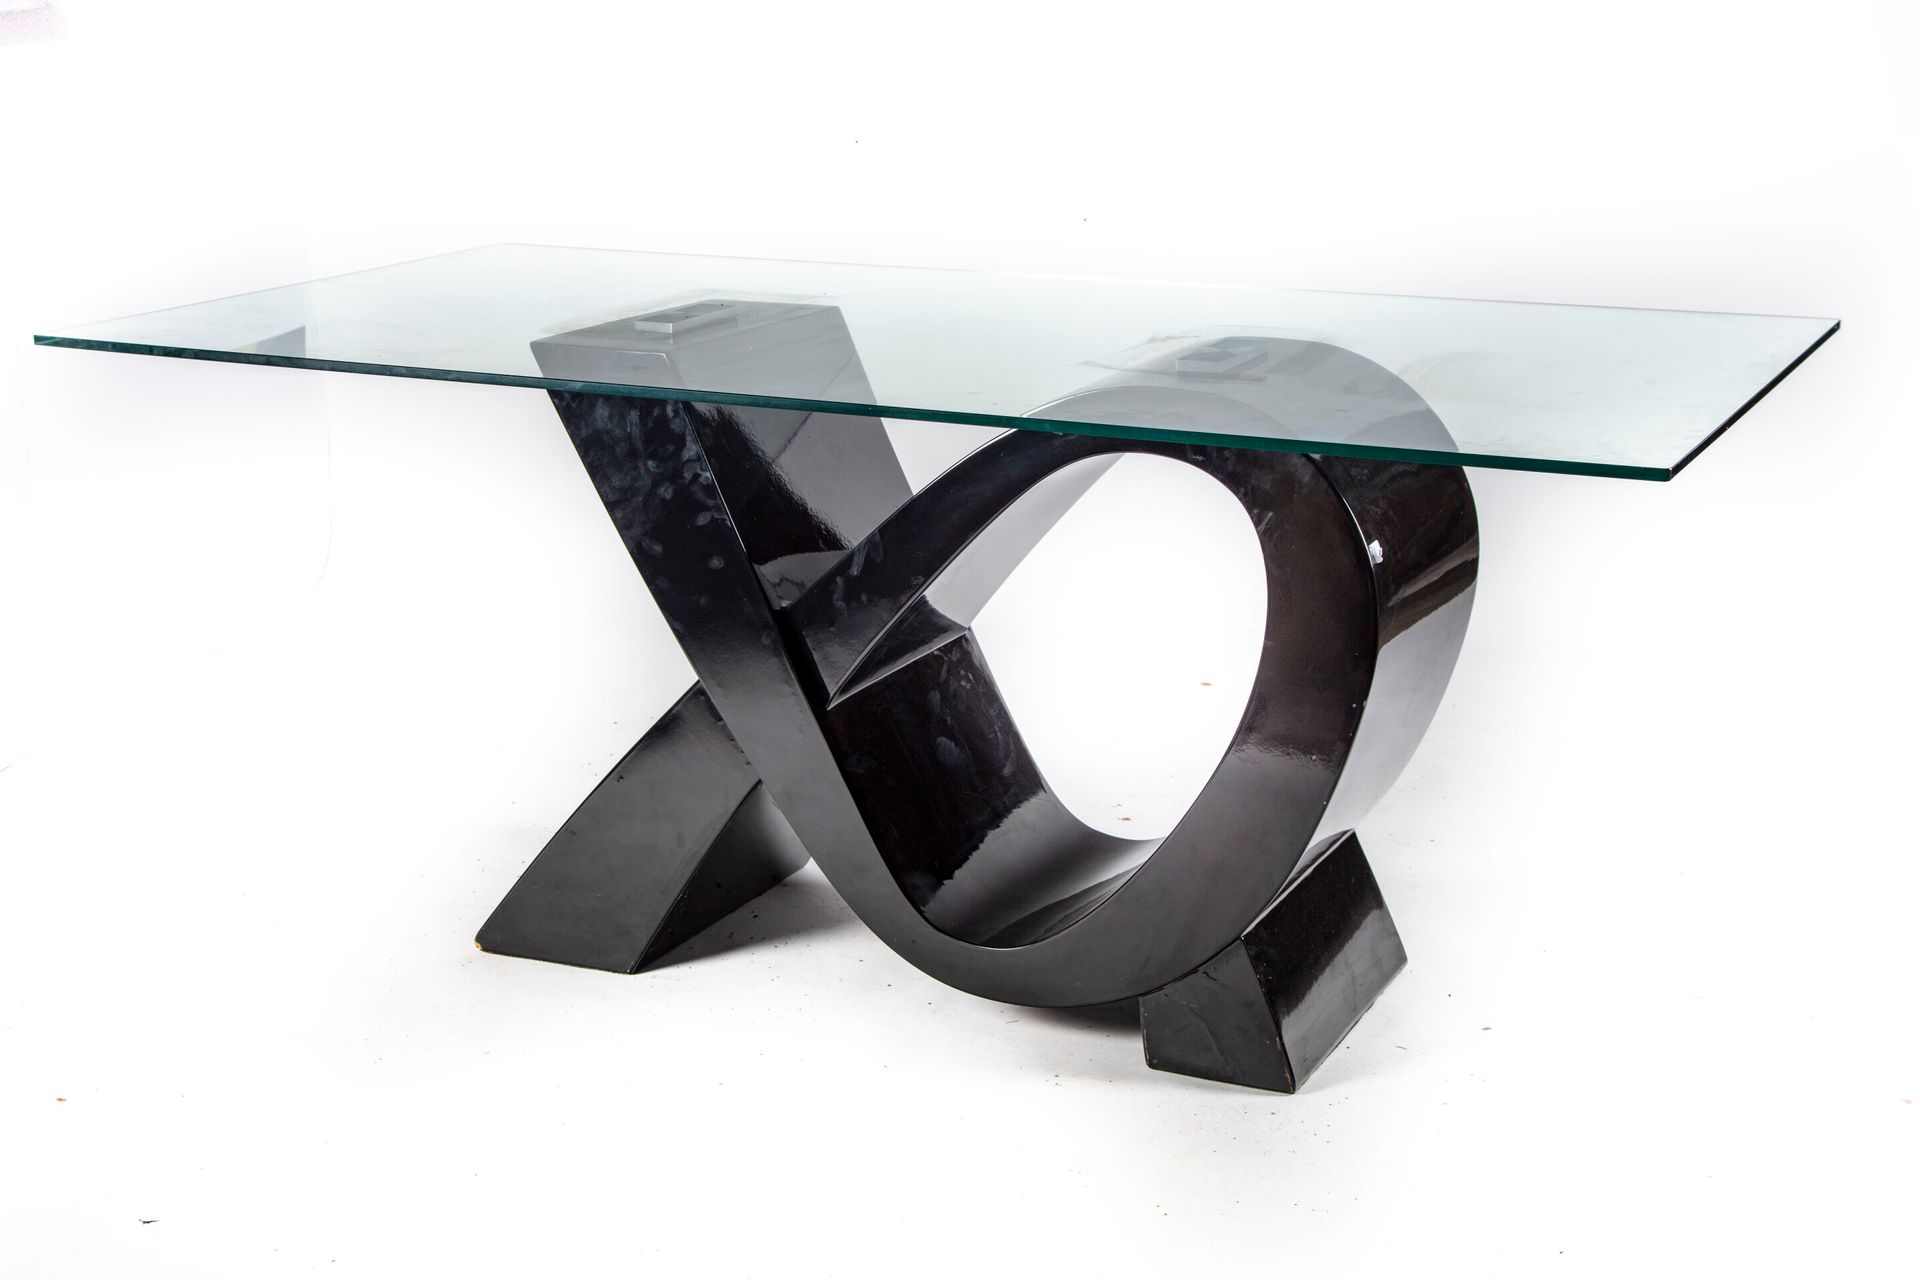 Null 长方形玻璃桌面餐桌，置于黑色漆面木质 "阿尔法 "桌腿上

约1980年

H.75厘米；宽180厘米；深90厘米

小碎片